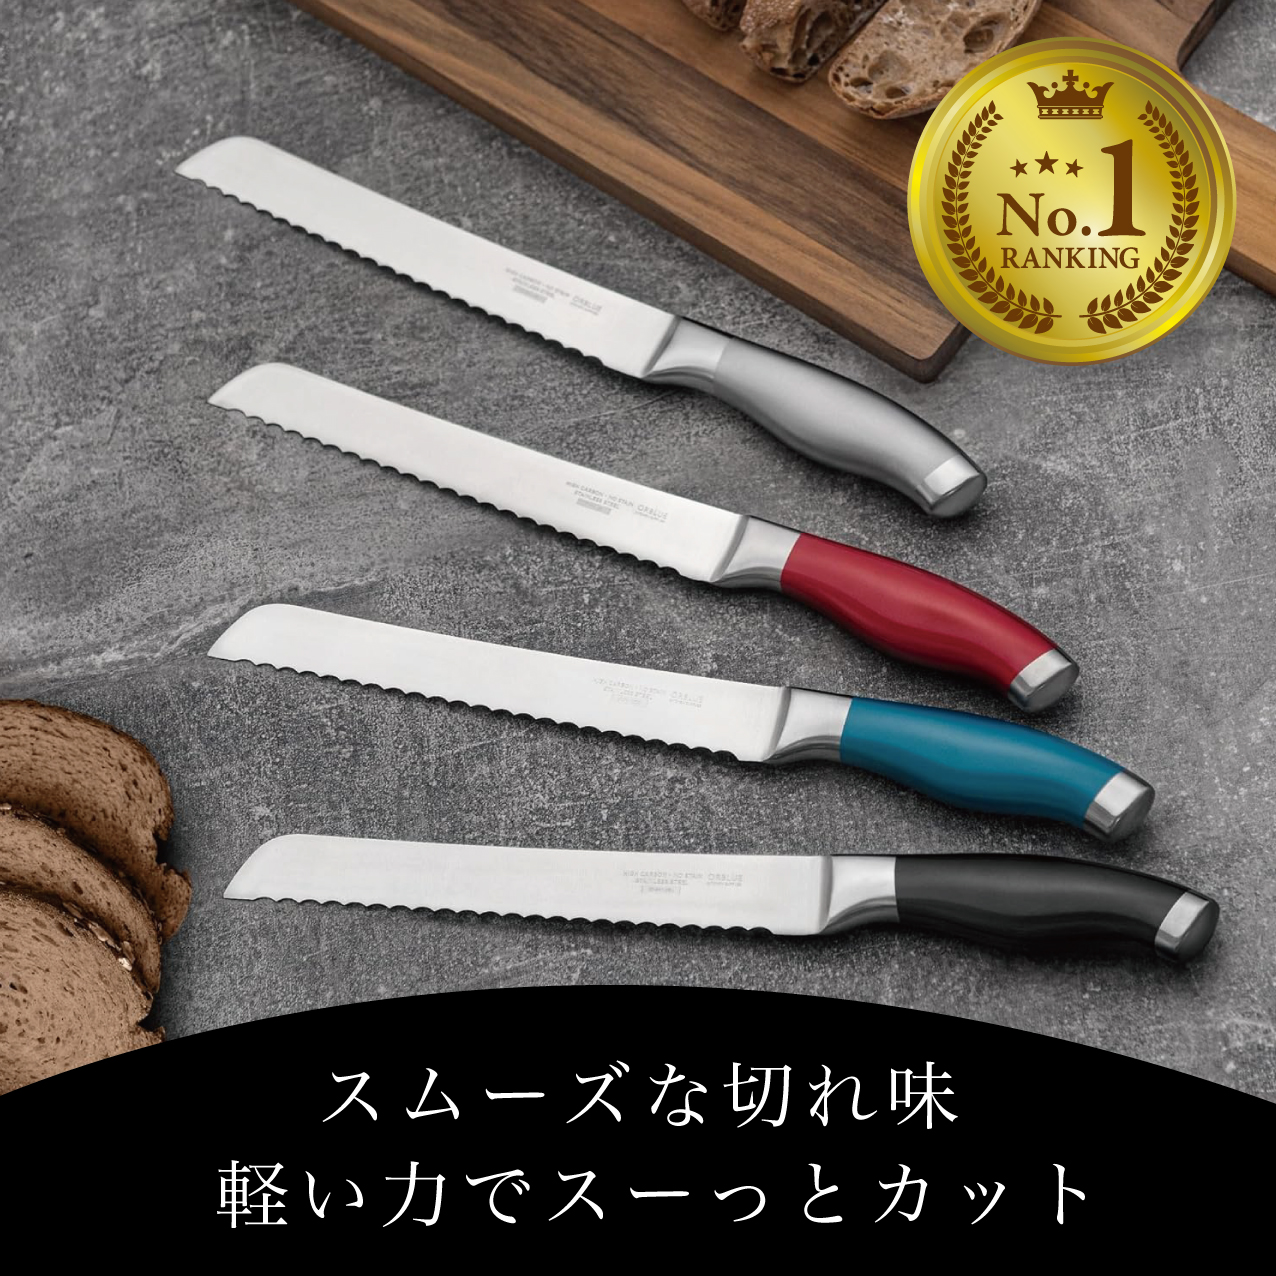 ORBLUE パン切りナイフの商品画像